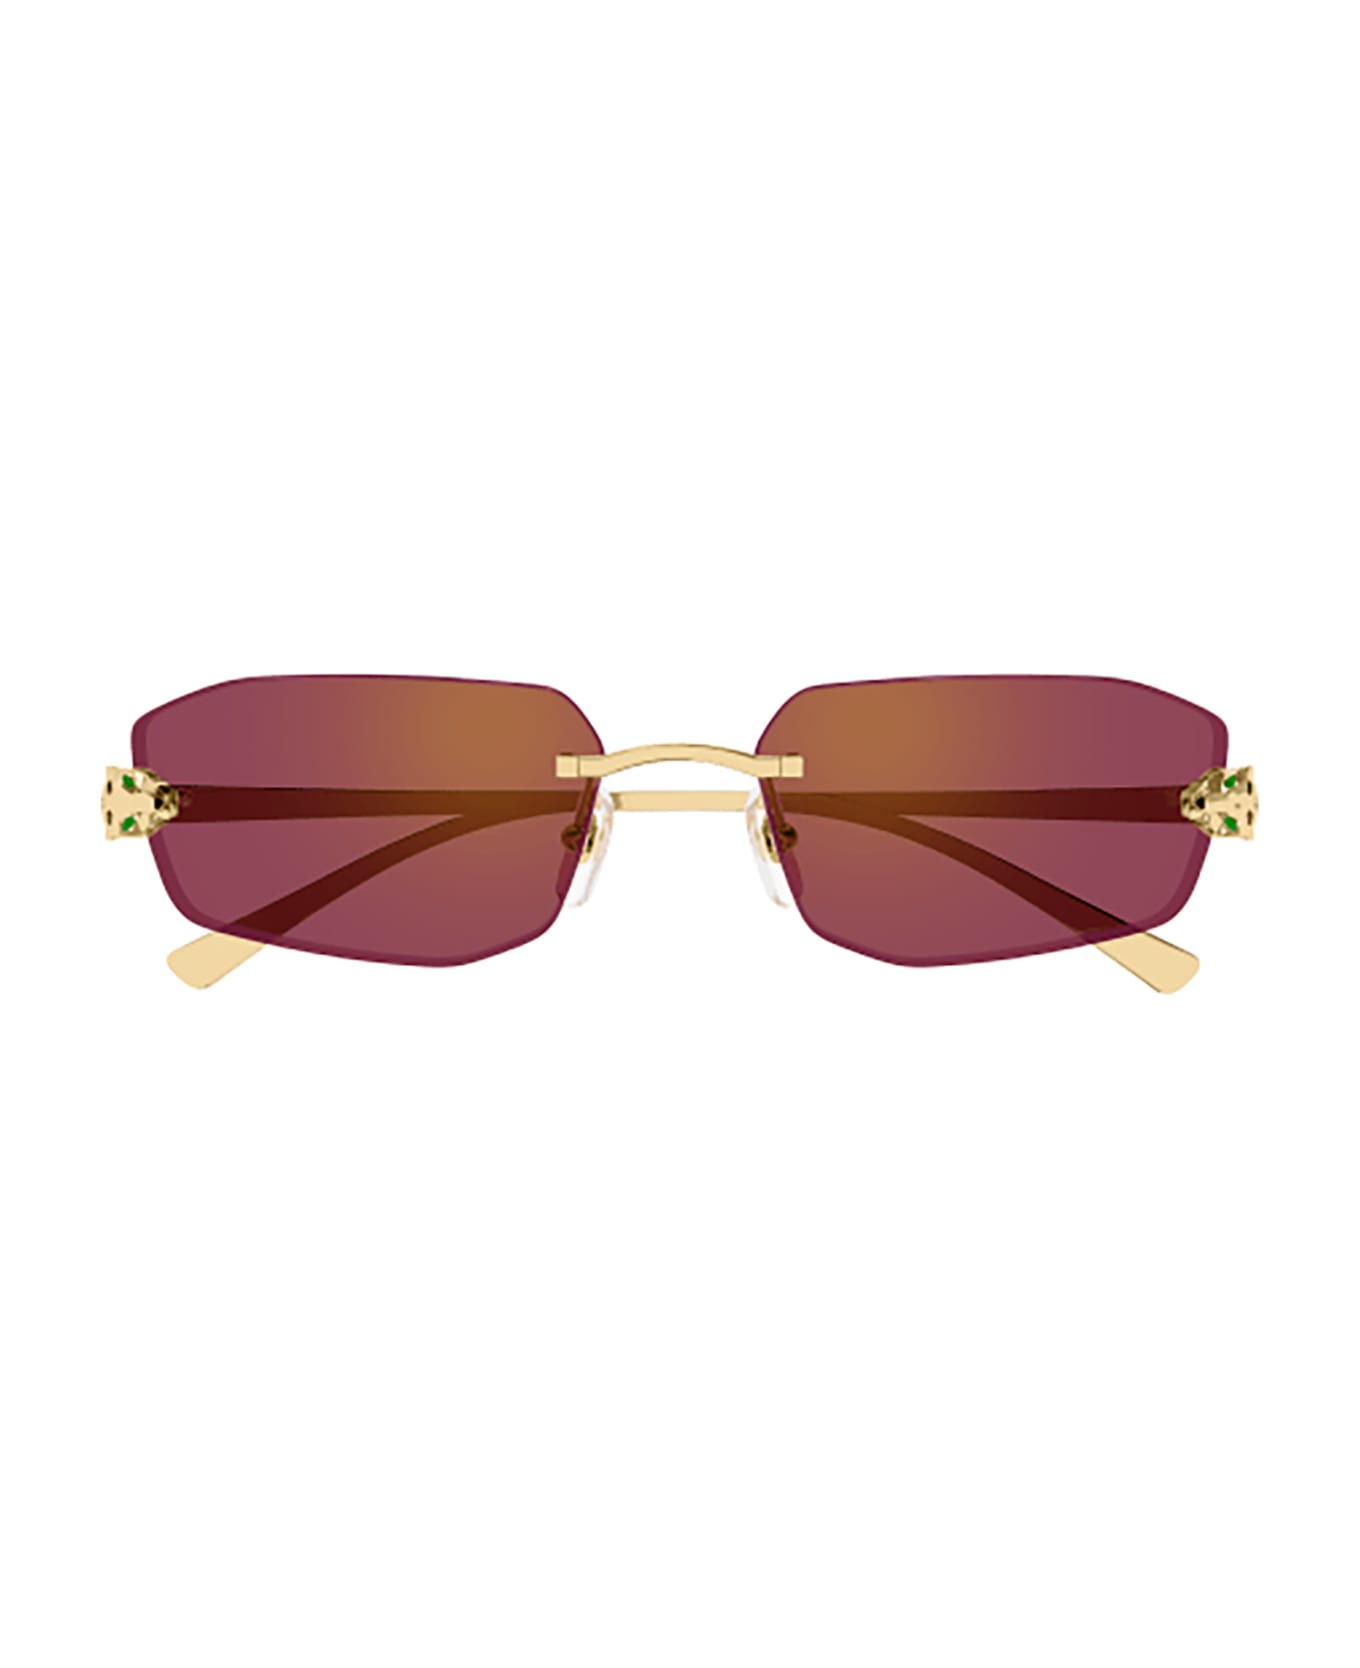 Cartier Eyewear Ct0474s Sunglasses - 002 GOLD GOLD RED サングラス